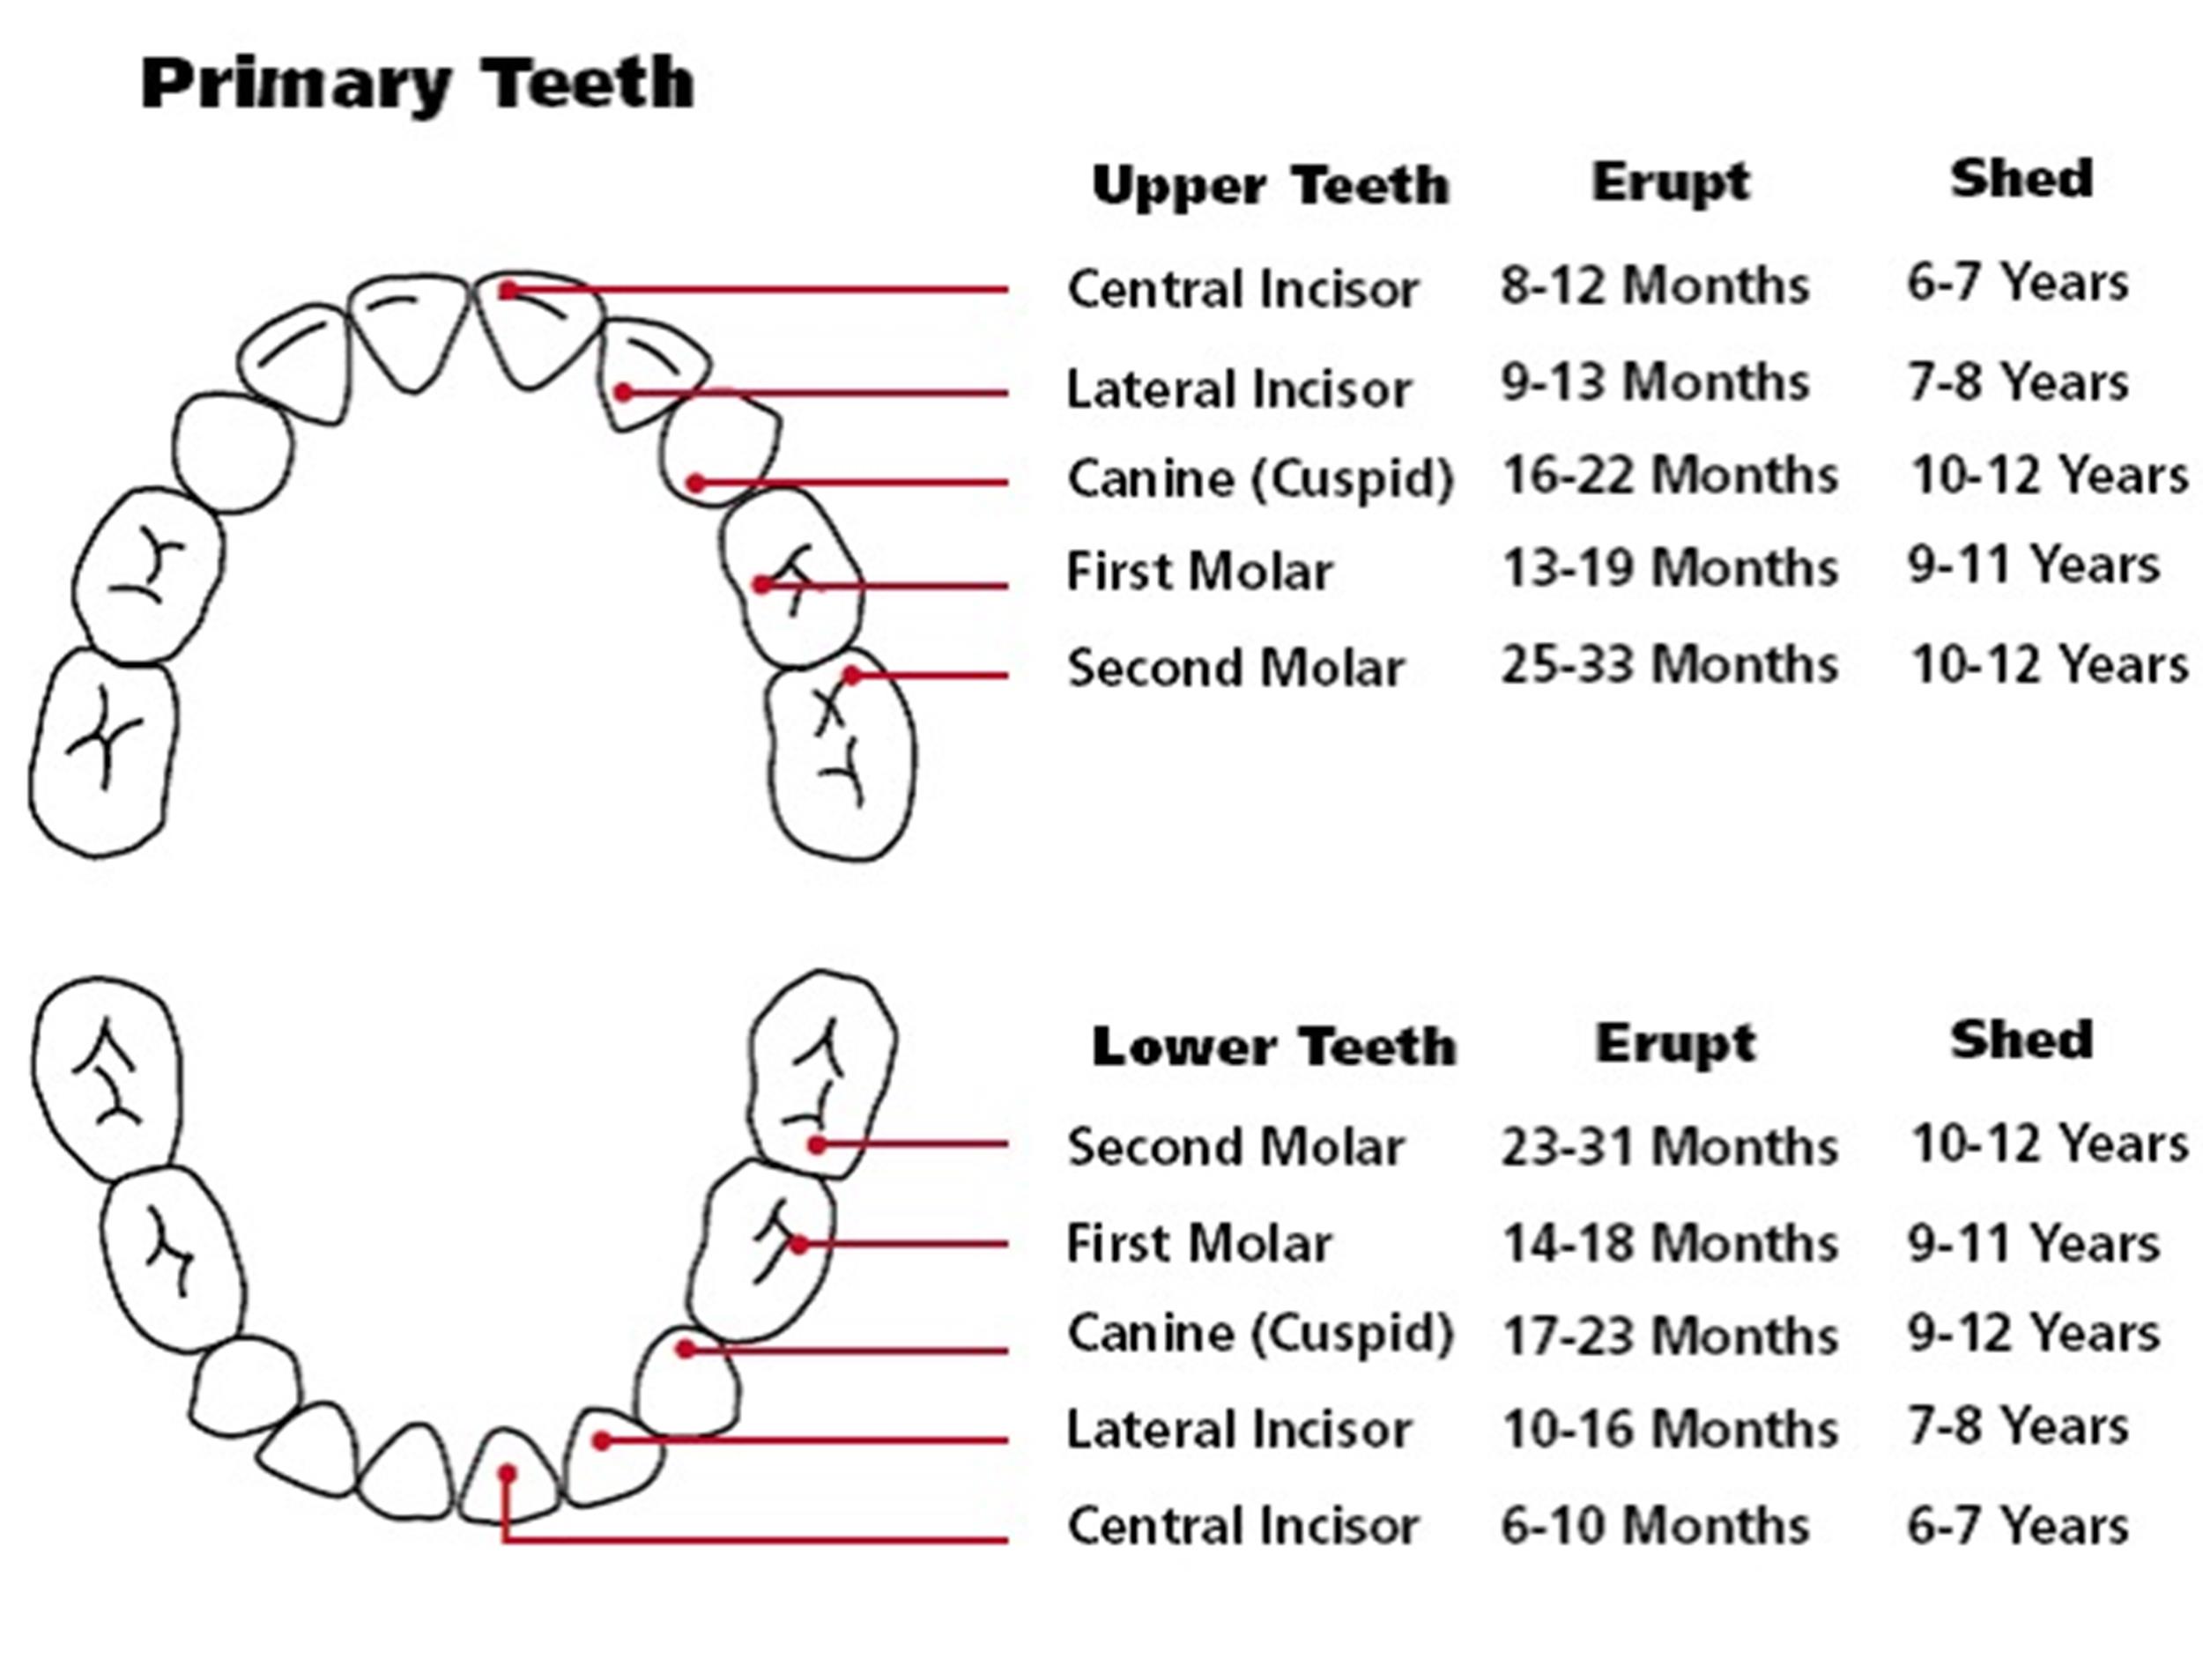 38 Printable Baby Teeth Charts & Timelines ᐅ TemplateLab